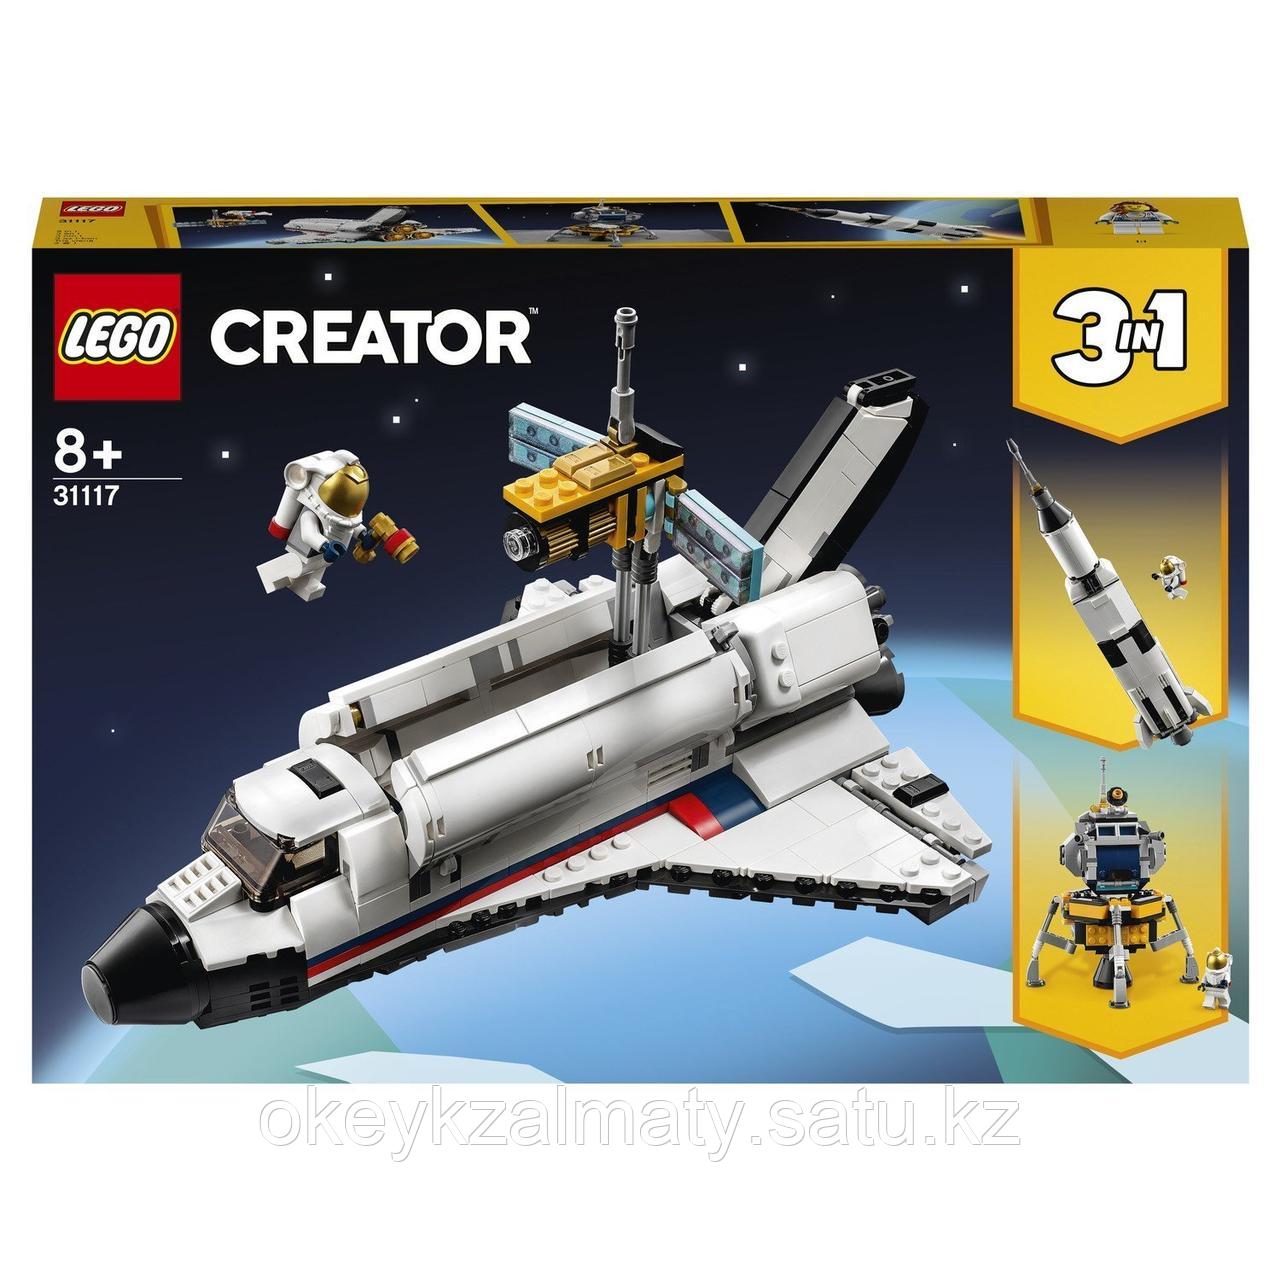 LEGO Creator: Приключения на космическом шаттле 31117